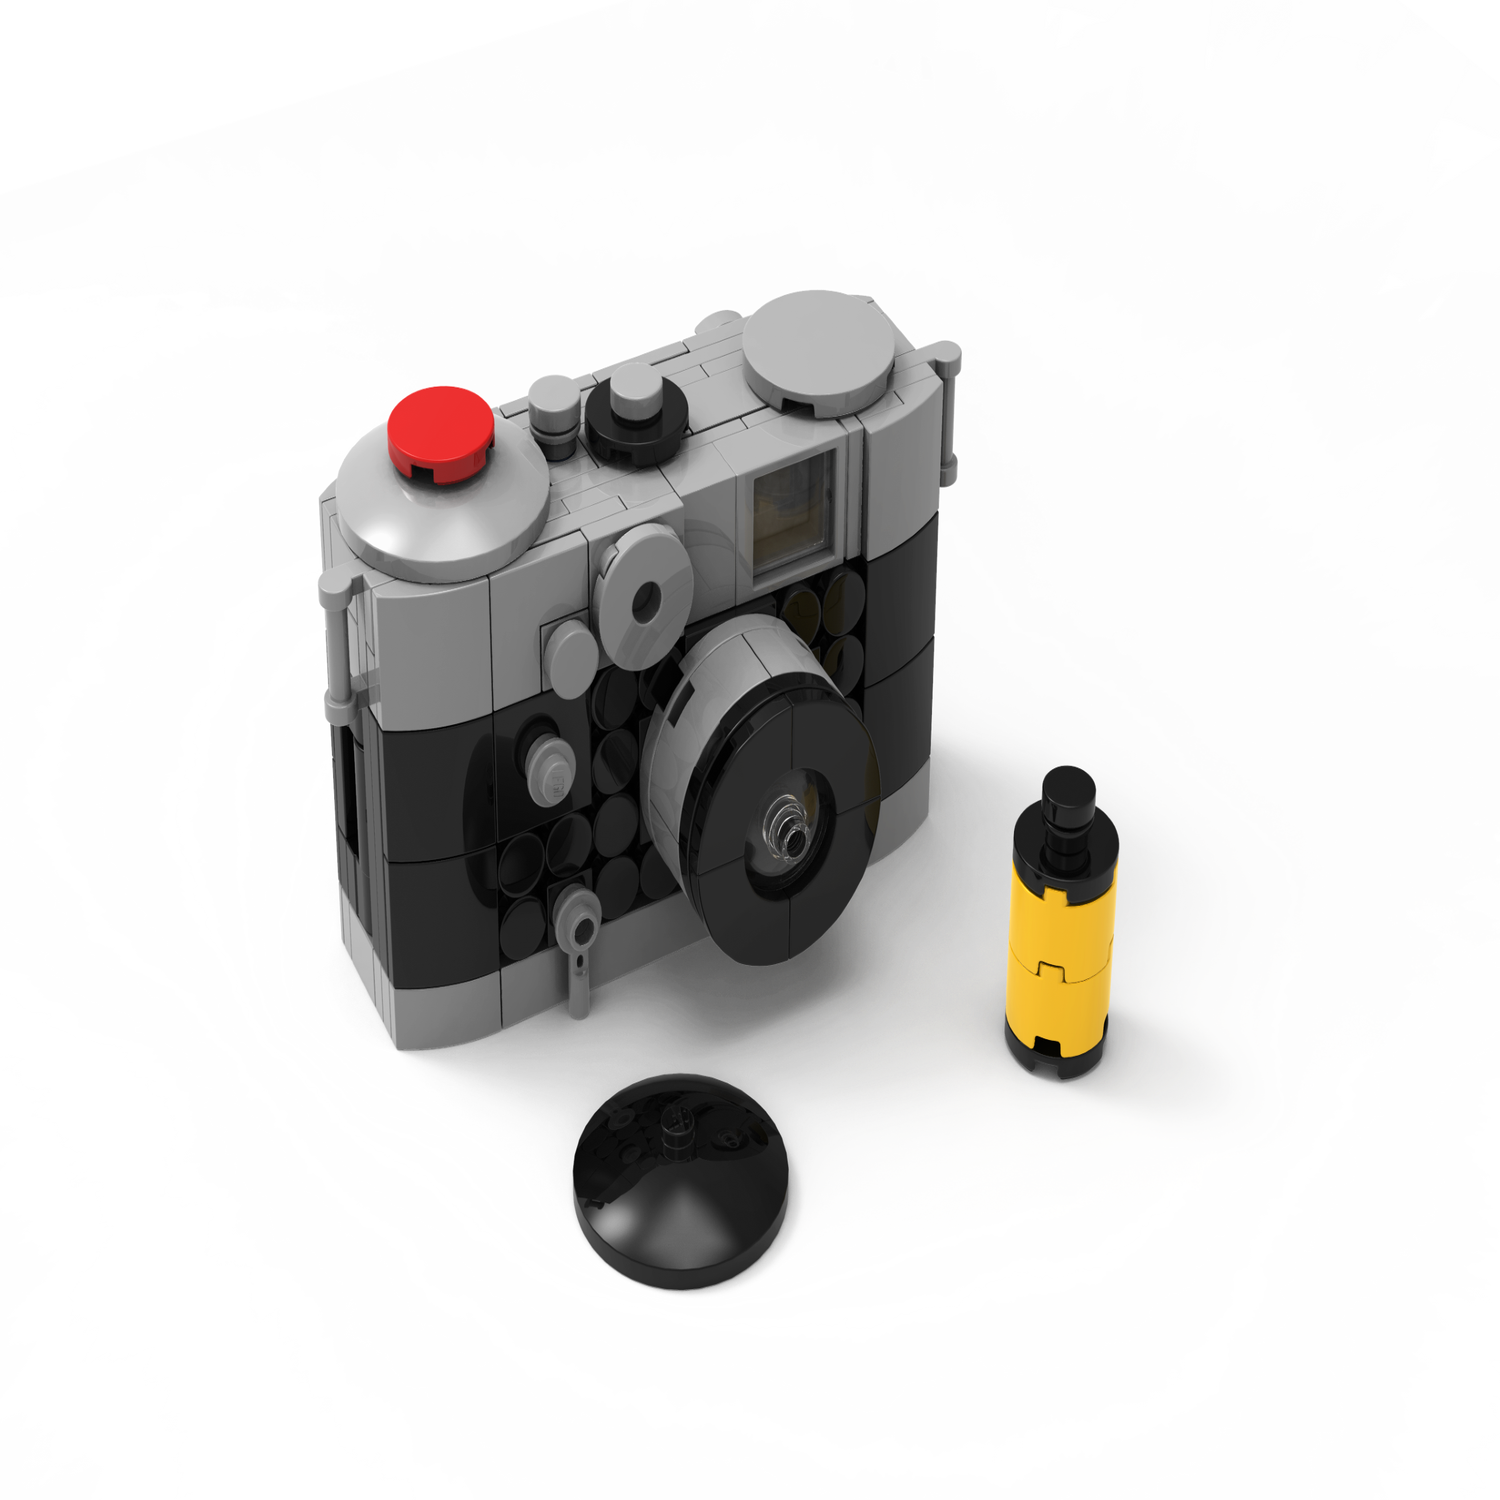 Las cámaras fotográficas analógicas siguen vivas con LEGO •